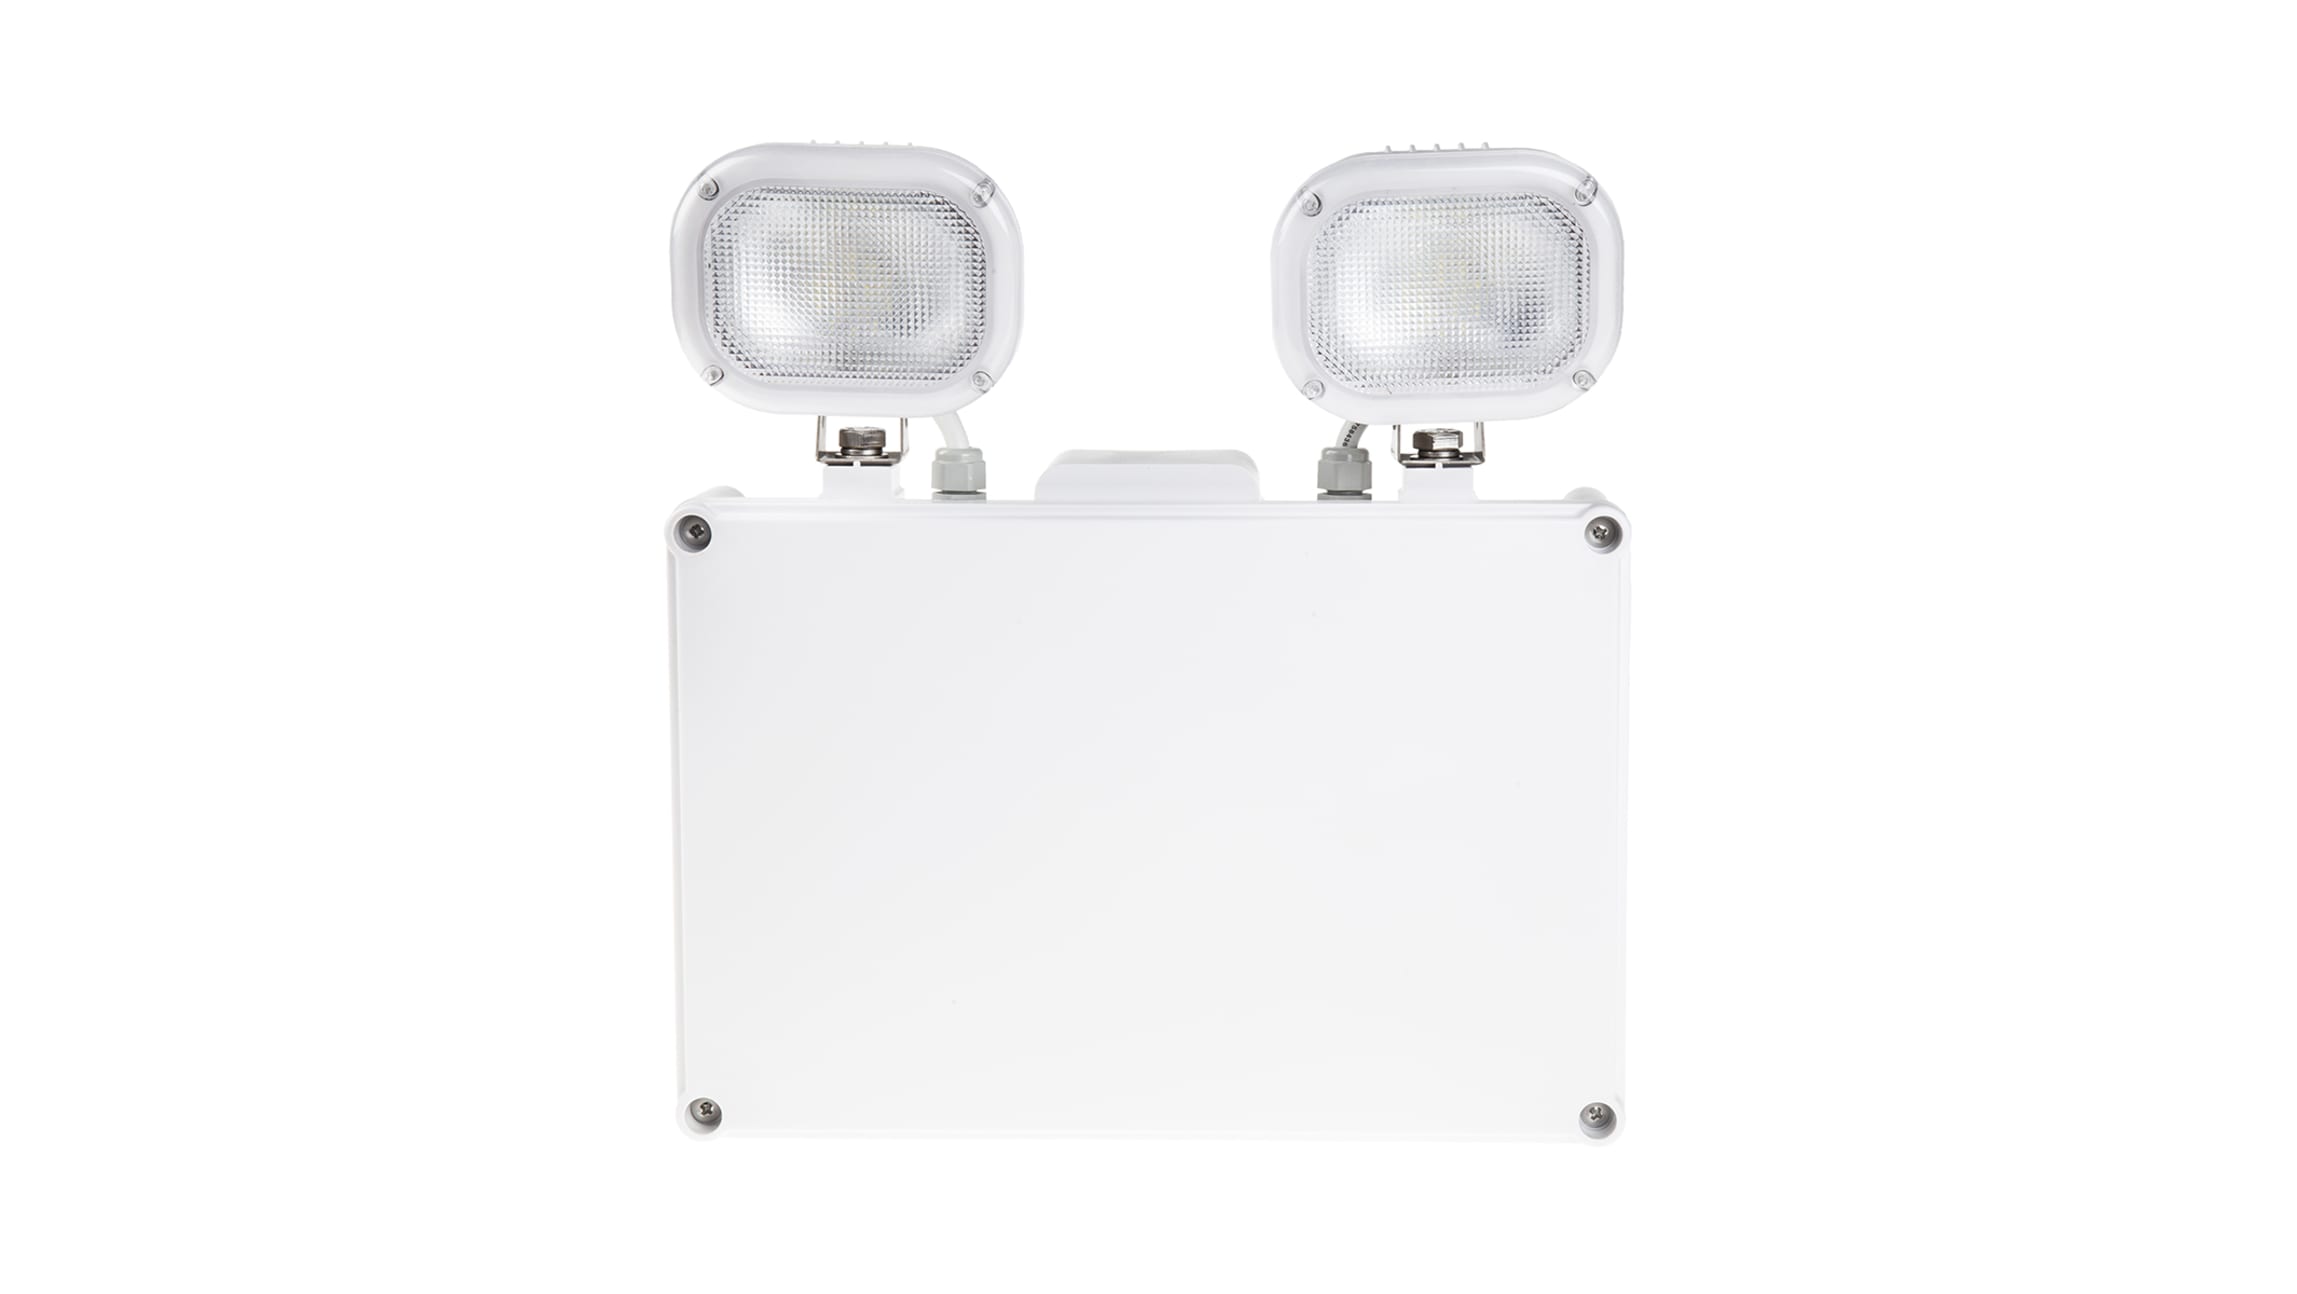 LED Sicherheitsleuchte Autotest, 7W Notbeleuchtung UNI7 IP65